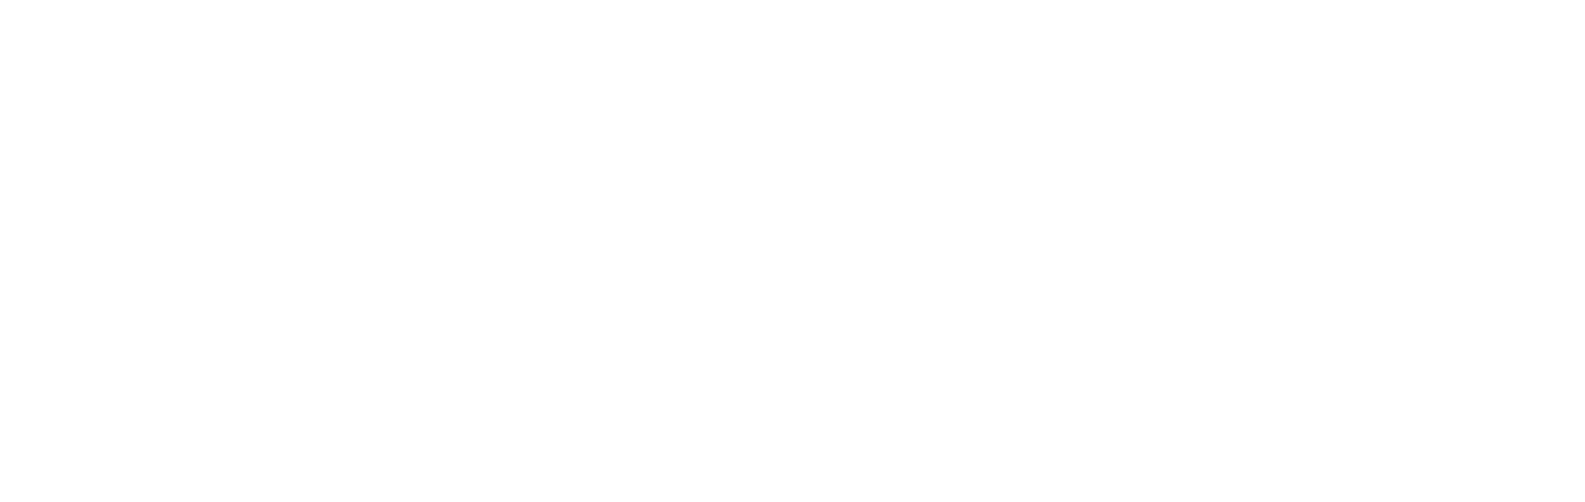 Canzona